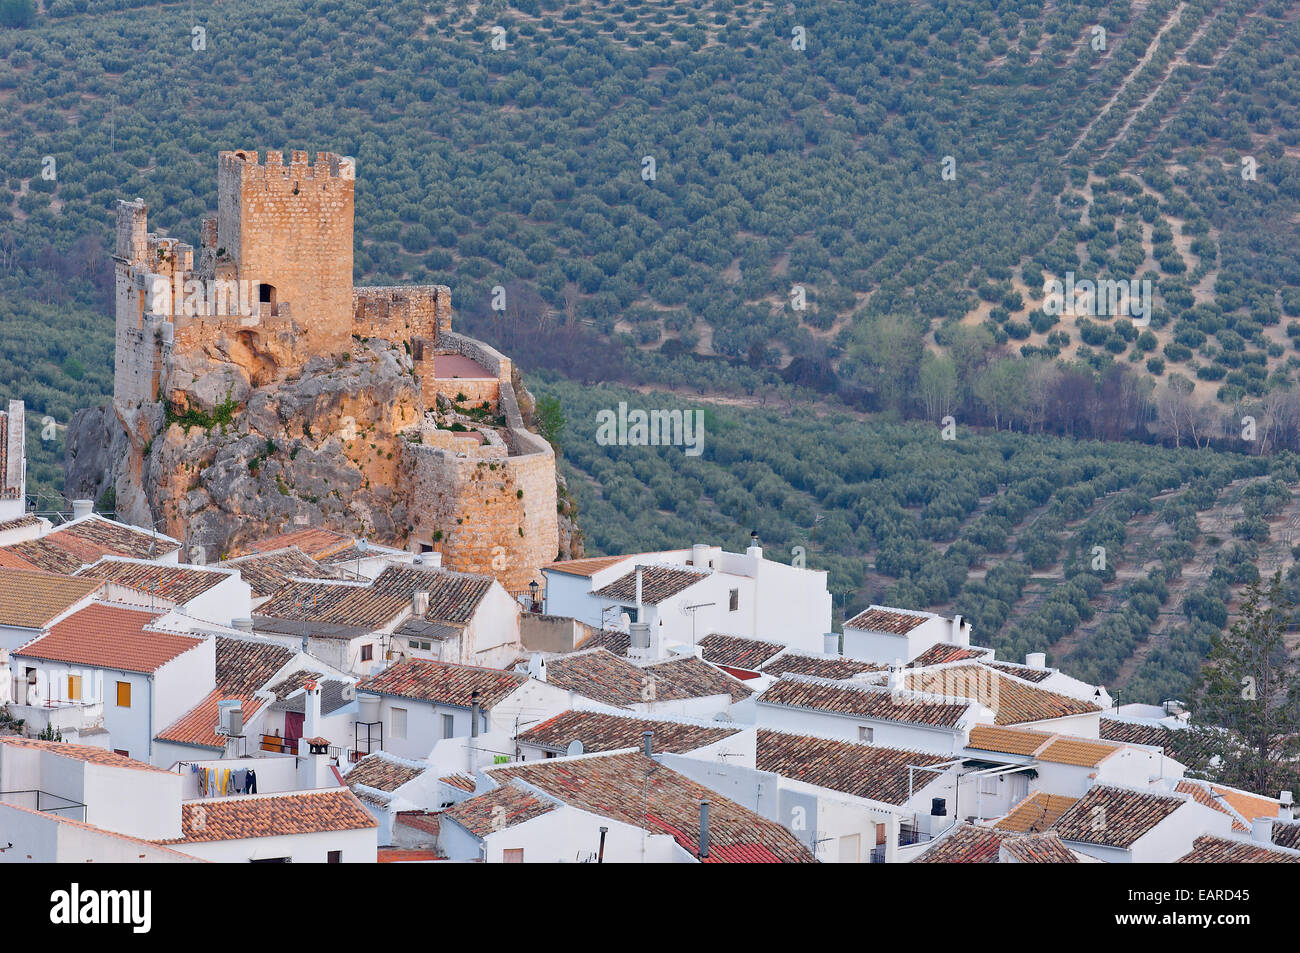 Zuheros castle and village, Sierras Subbéticas, Zuheros, Córdoba province, Andalusia, Spain Stock Photo